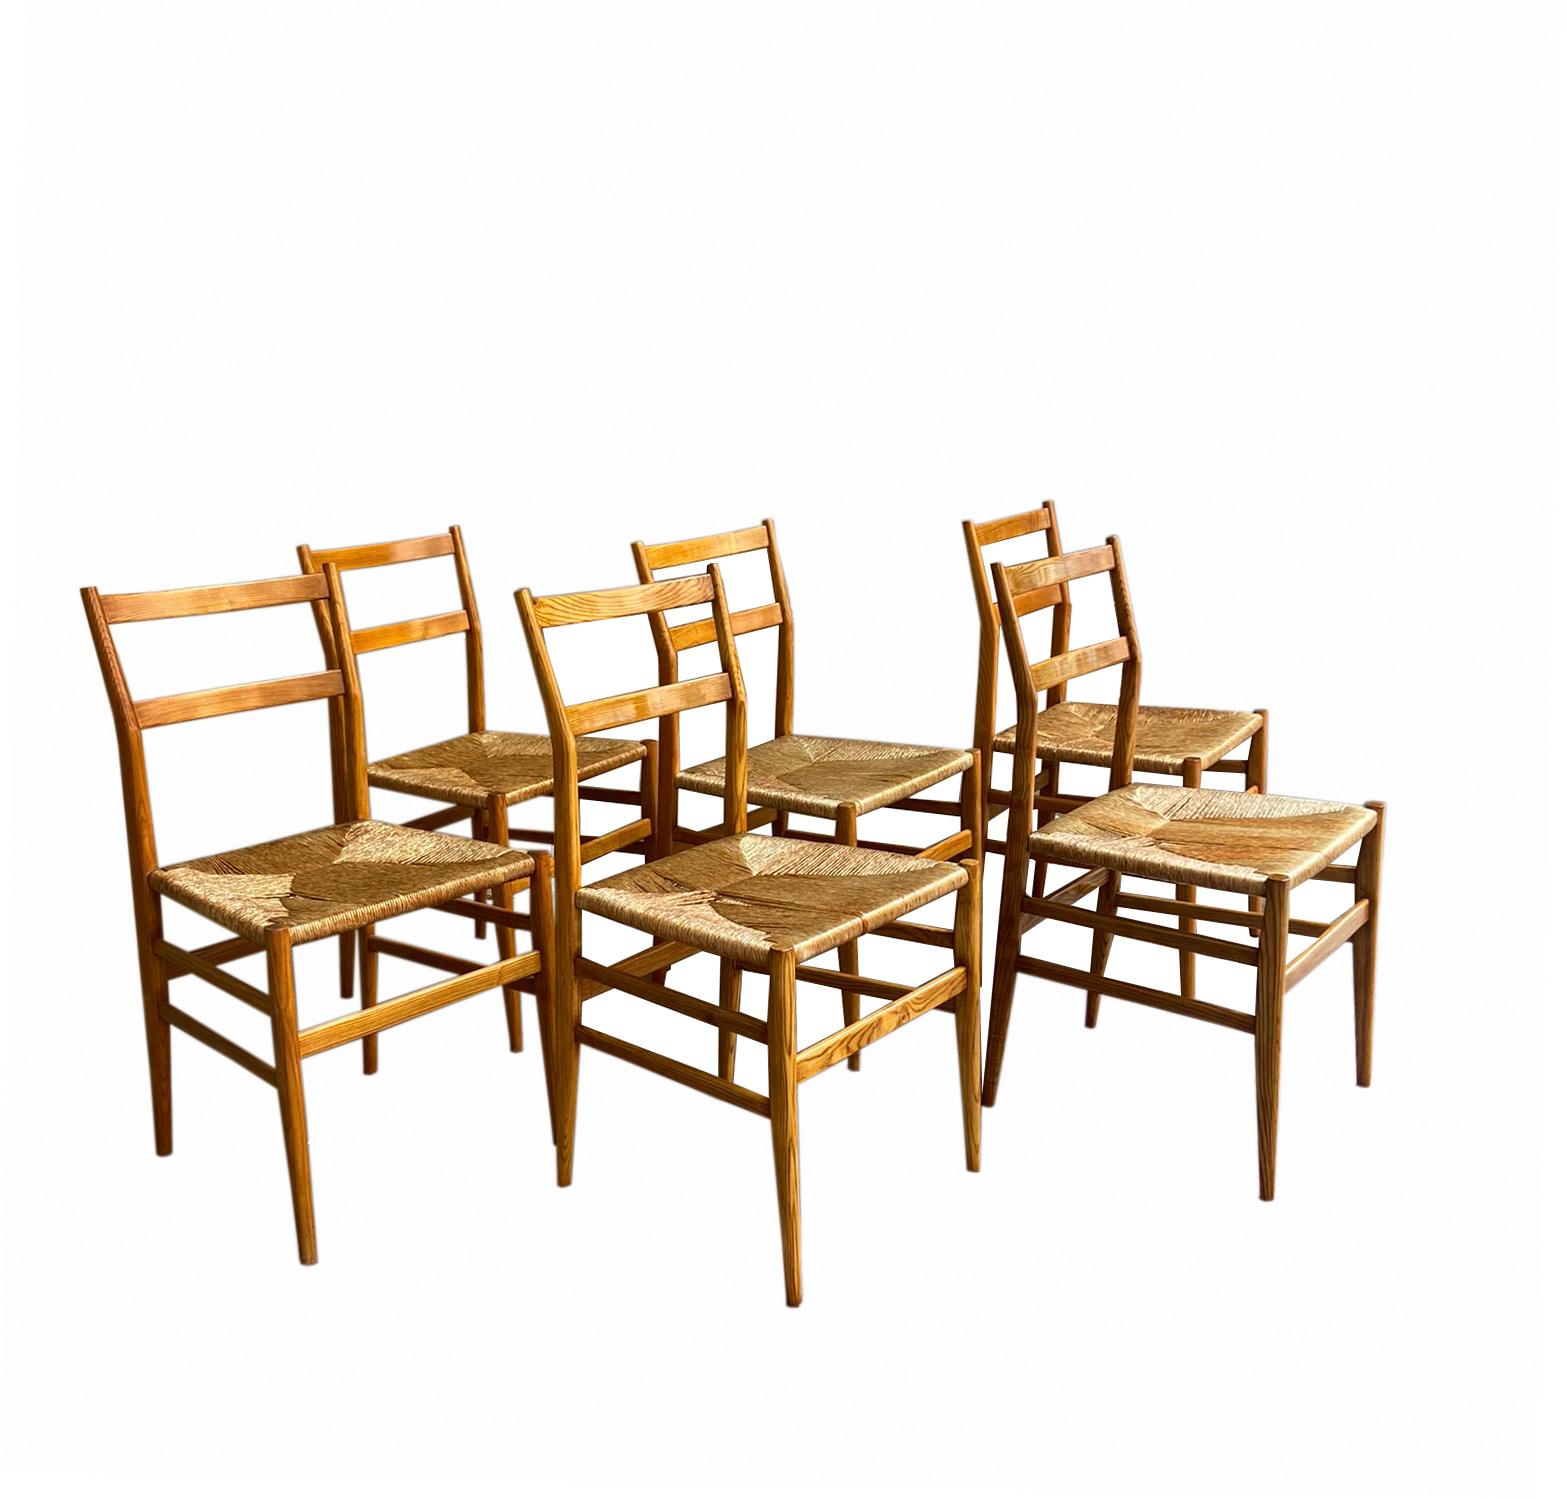 Set of 6 chairs Mod. Leggera. Light ash and straw. Leggera 646 produced by Cassina. Iconic design by Gio Ponti.